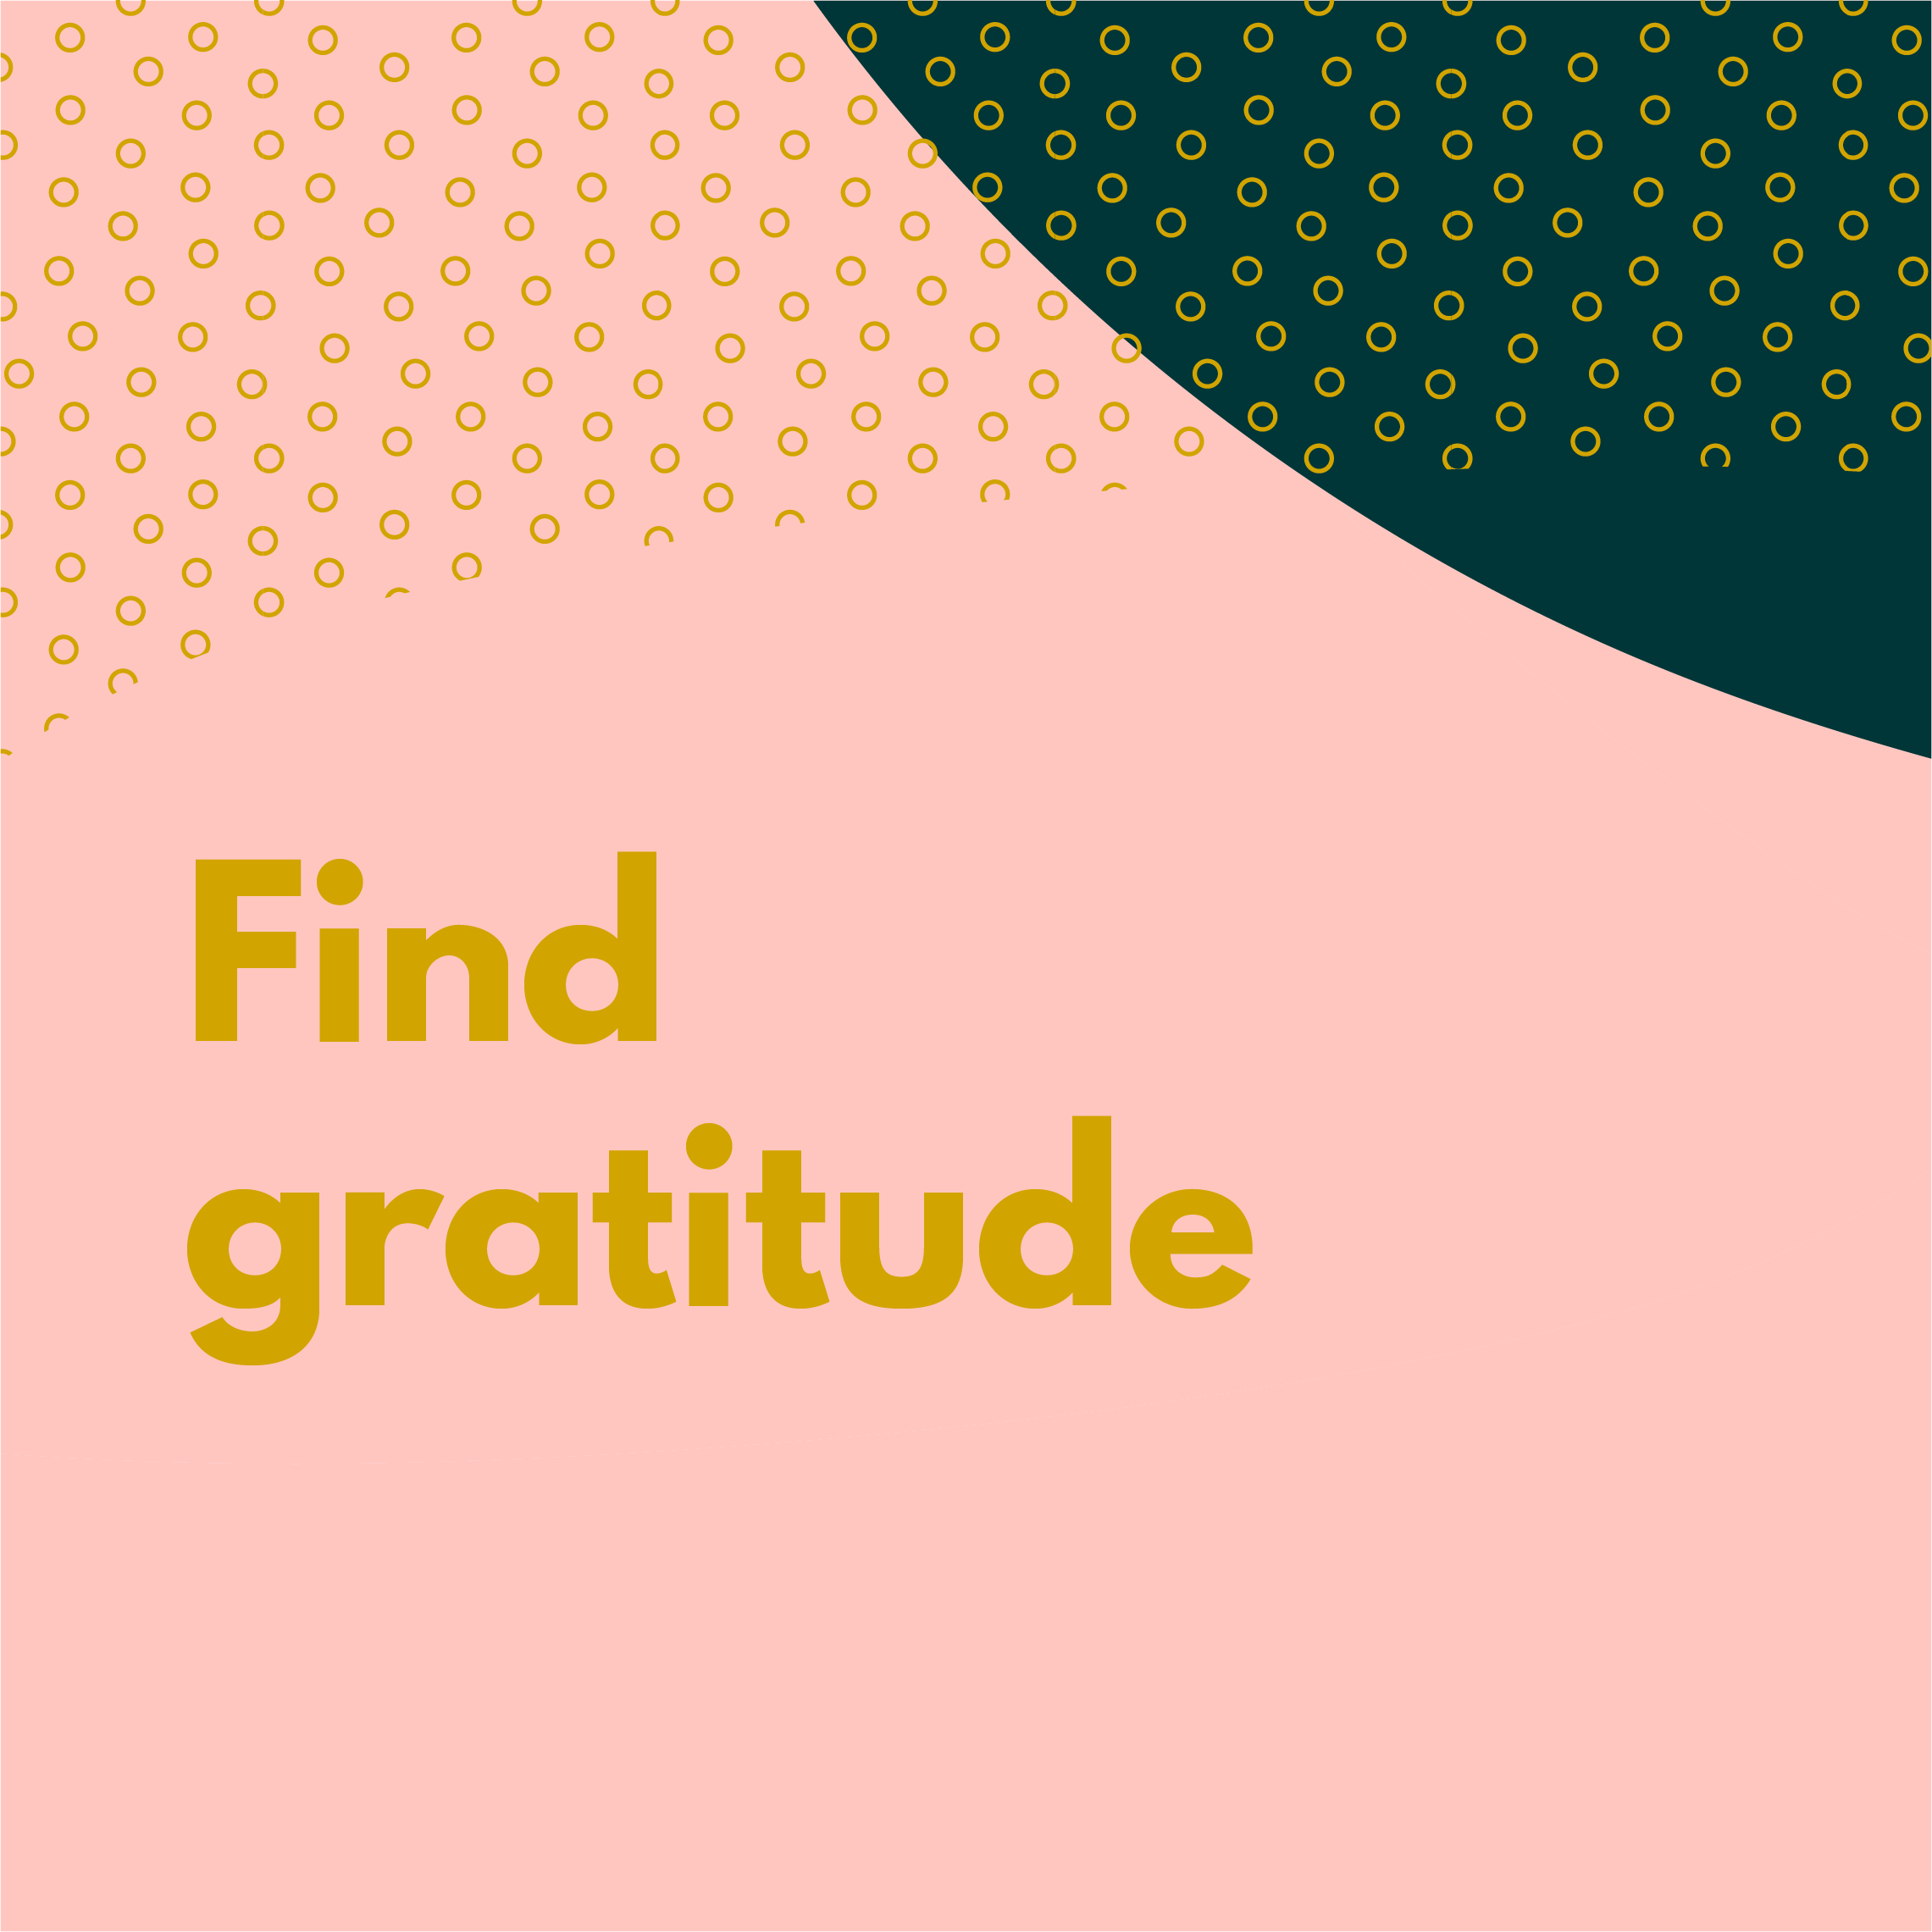 Find gratitude